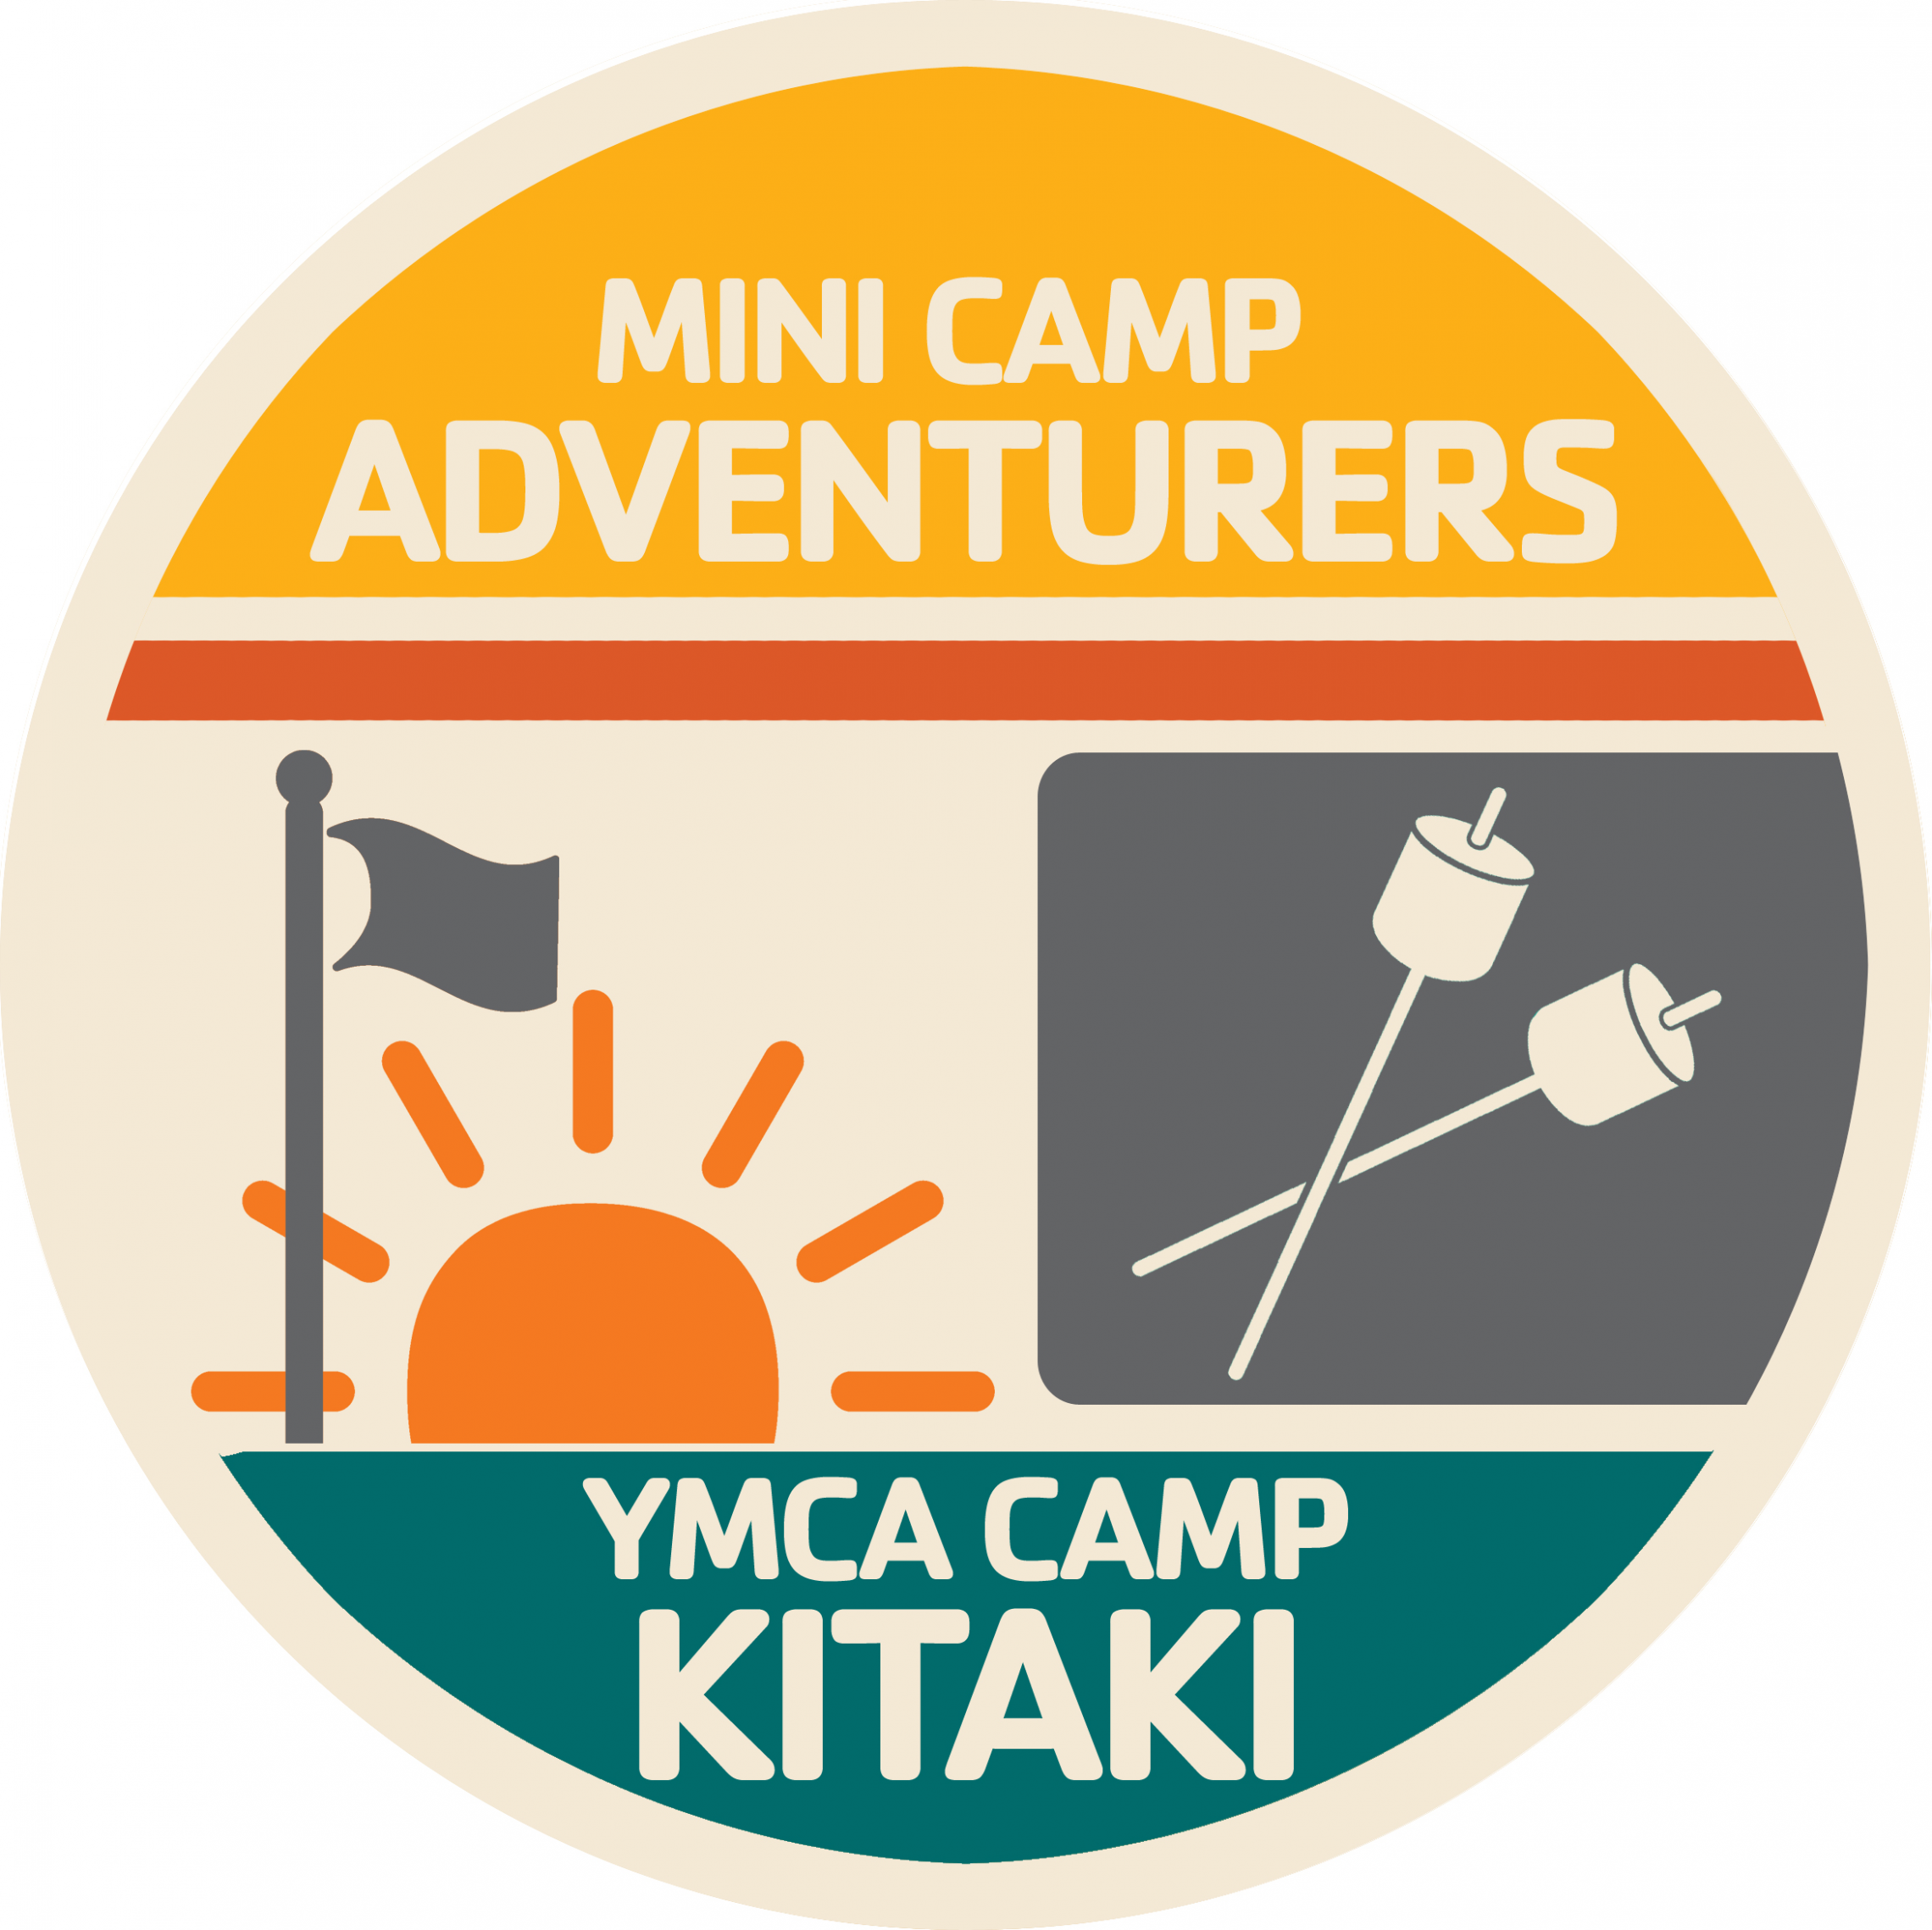 A program badge for Adventure Mini Camp